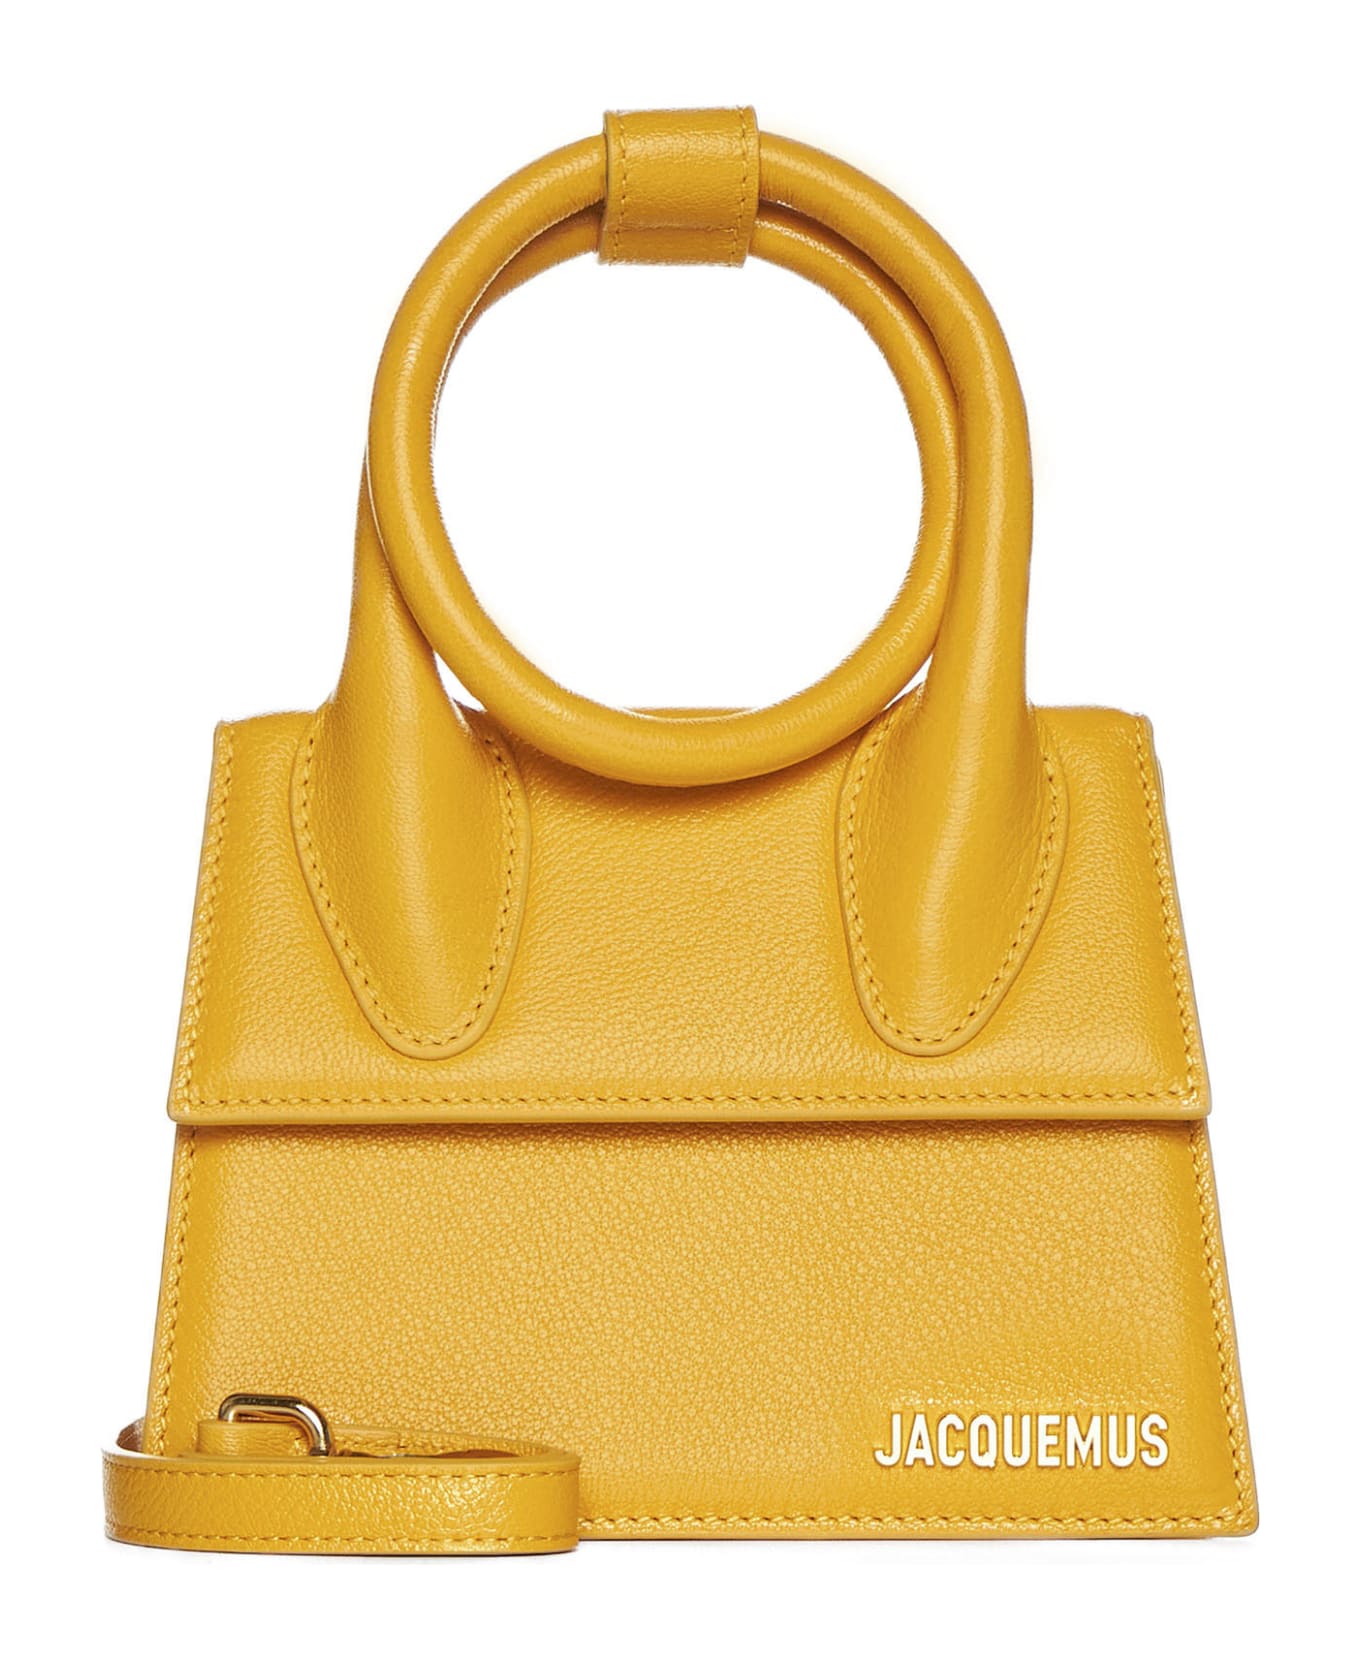 Jacquemus Le Chiquito Noeud Coiled Handbag - Dark orange トートバッグ